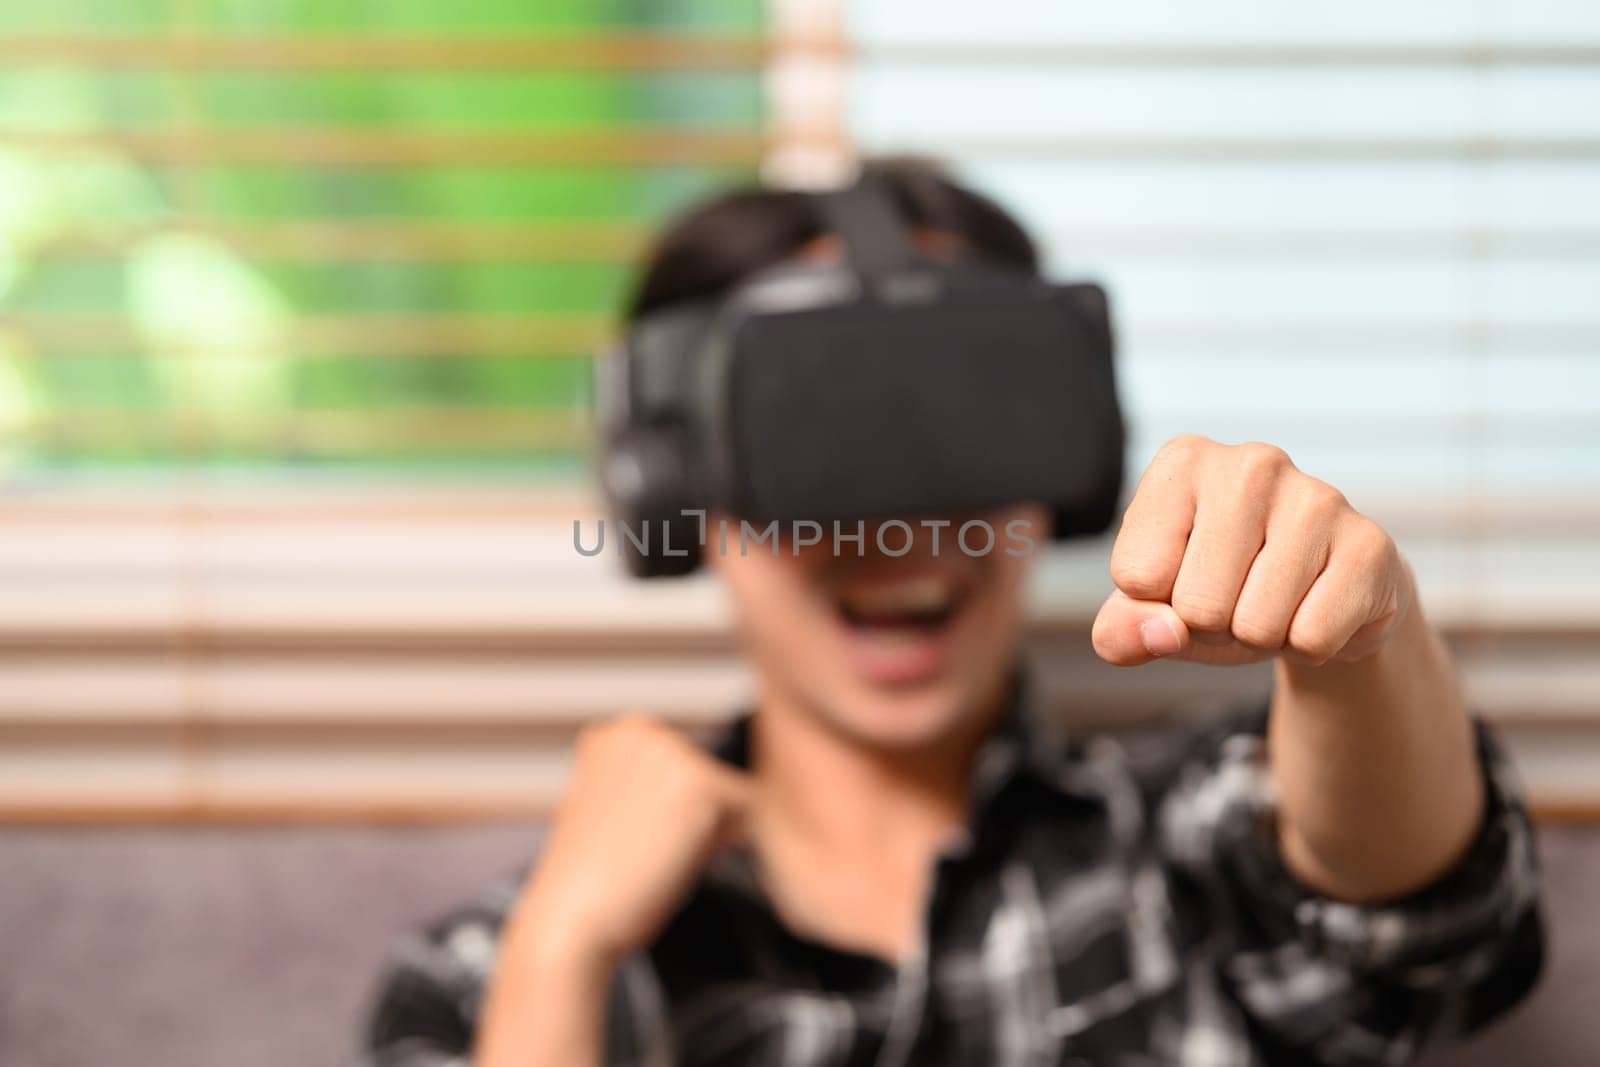 Joyful young man playing boxing game on virtual reality headset at home by prathanchorruangsak